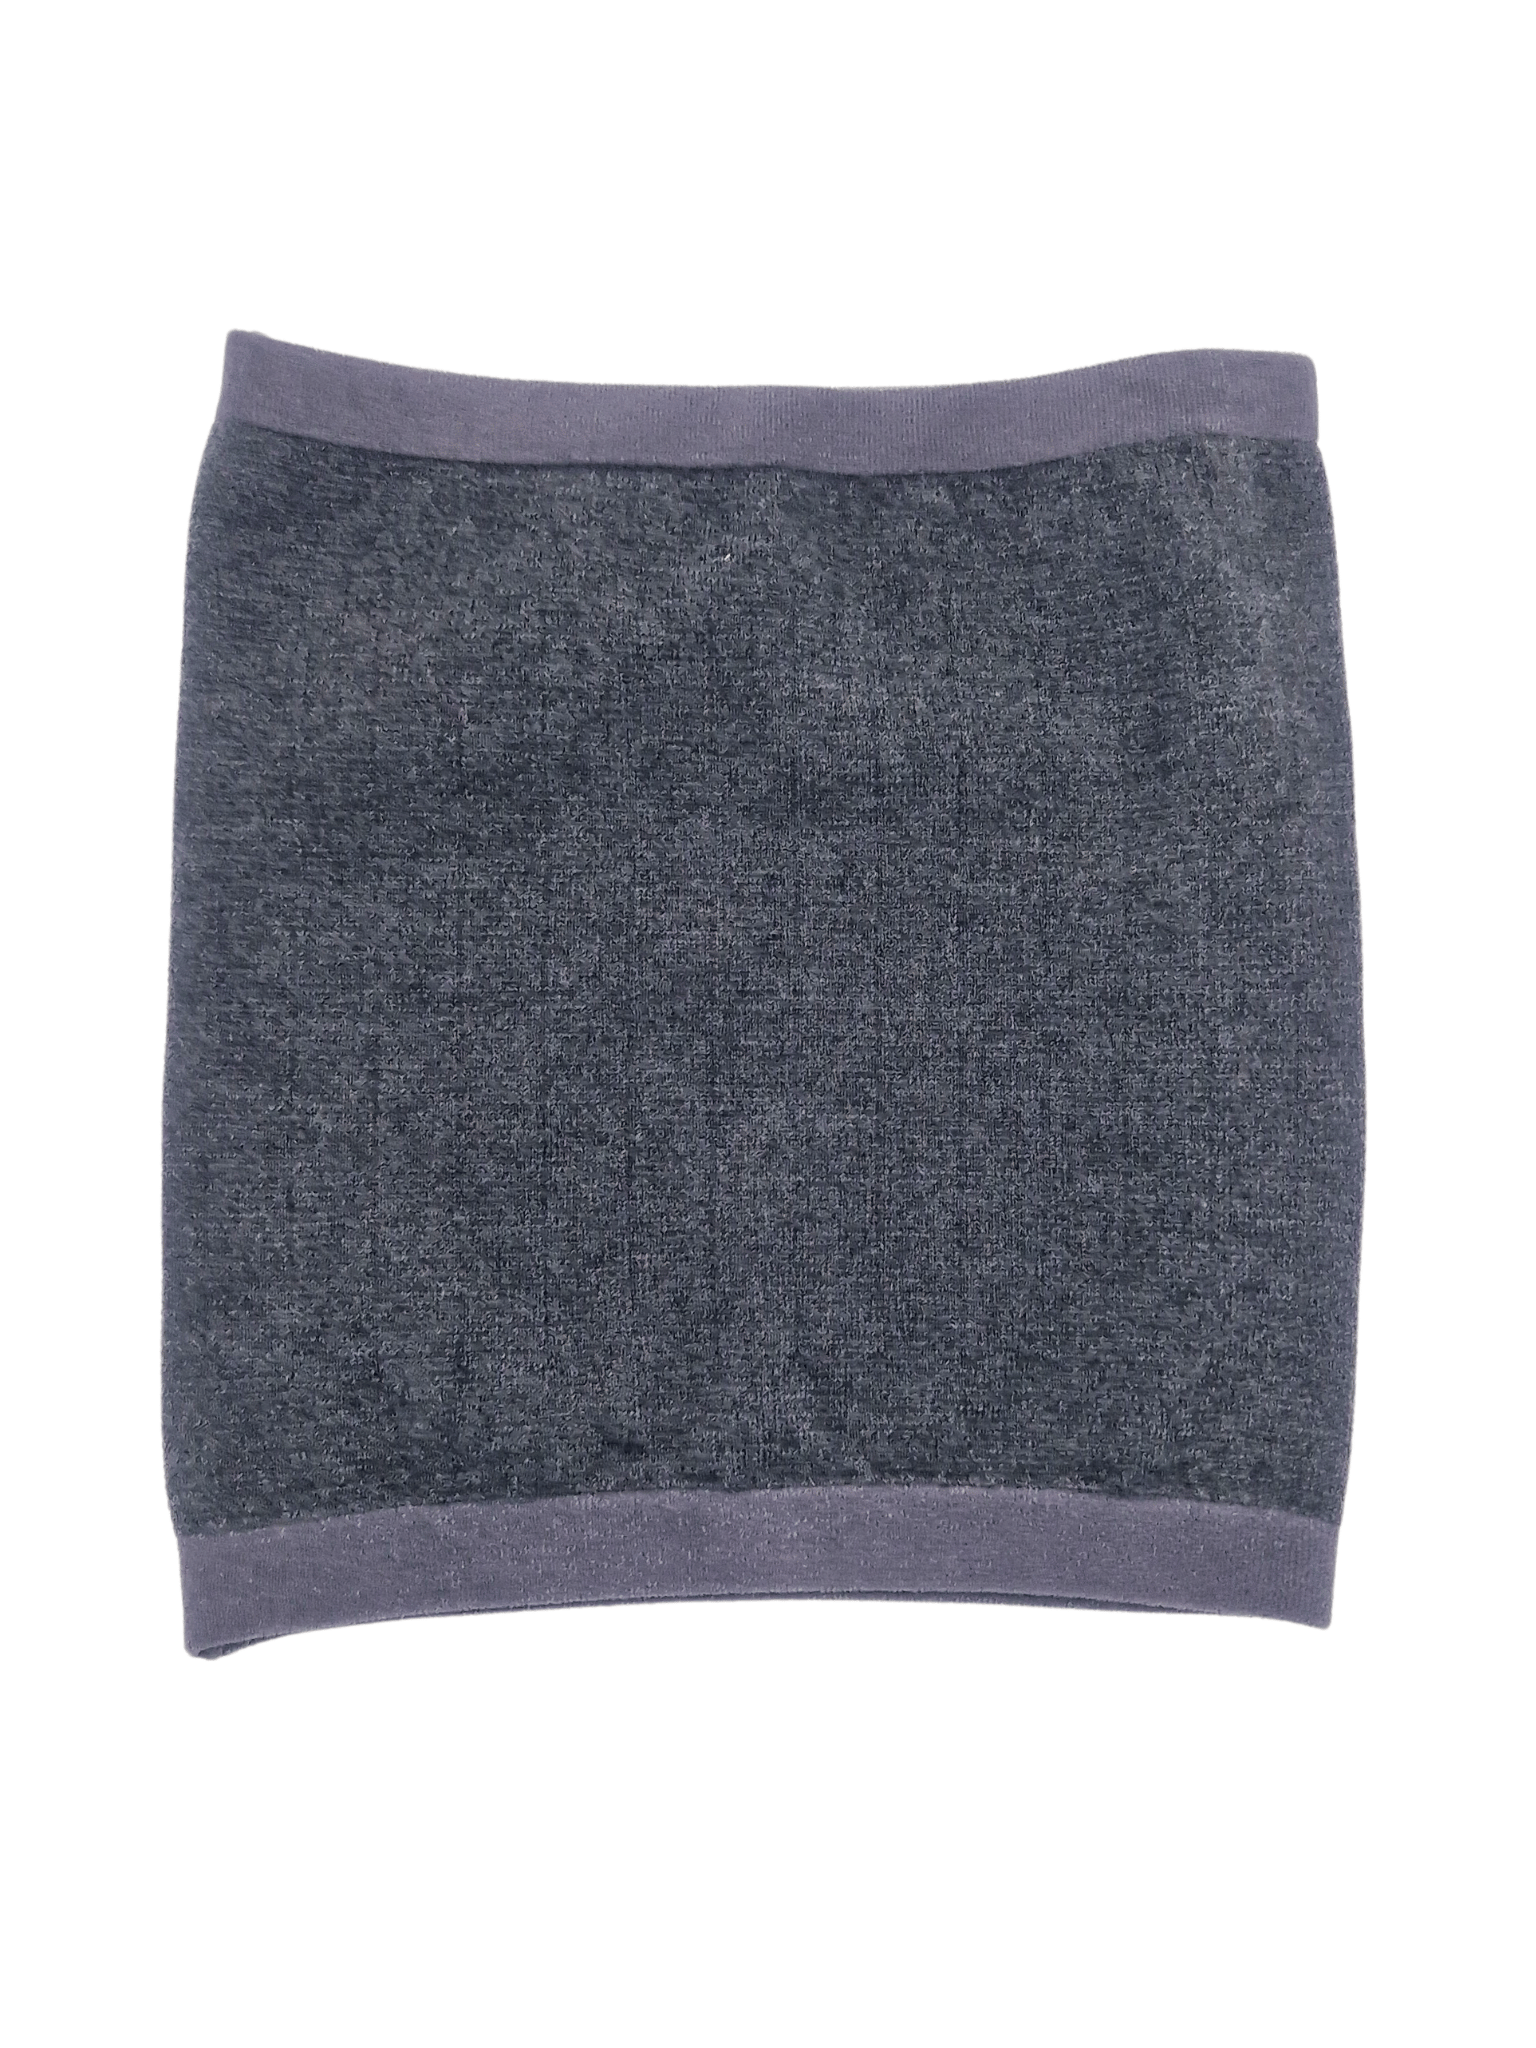 grey core warmer, the Koji Fine